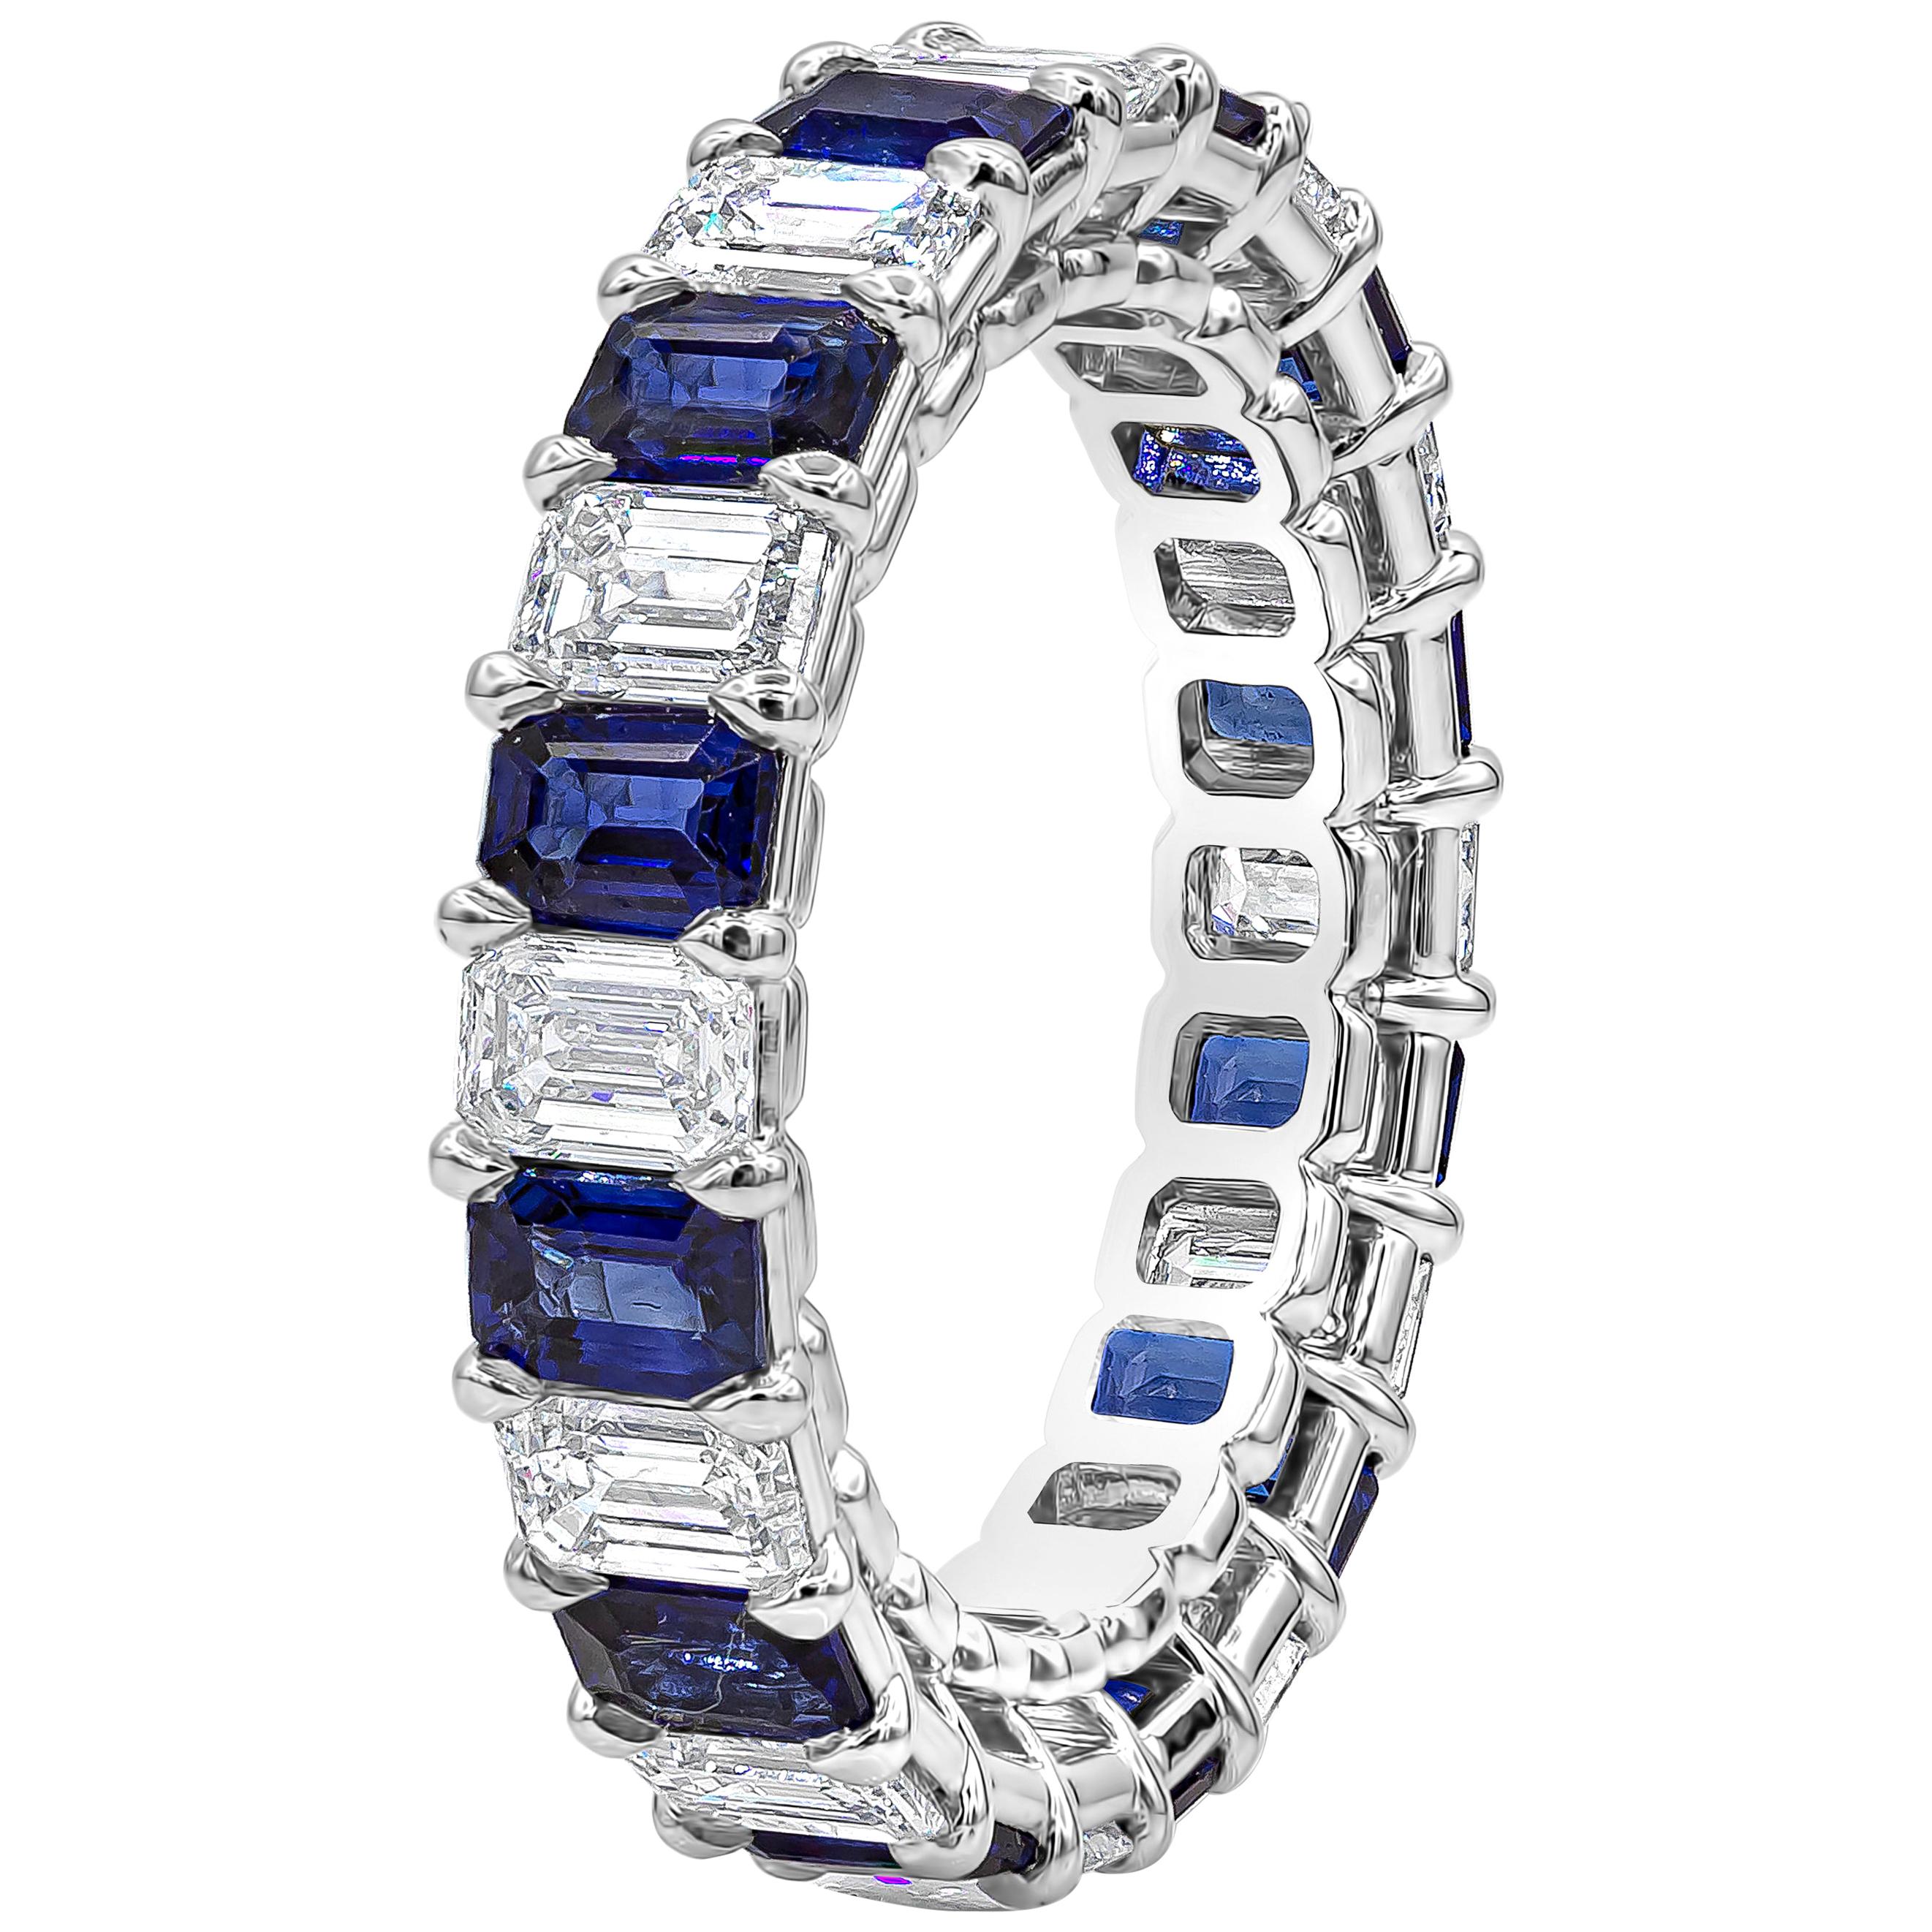 5.01 Carat Total Emerald Cut Alternating Blue Sapphire and Diamond Wedding Band